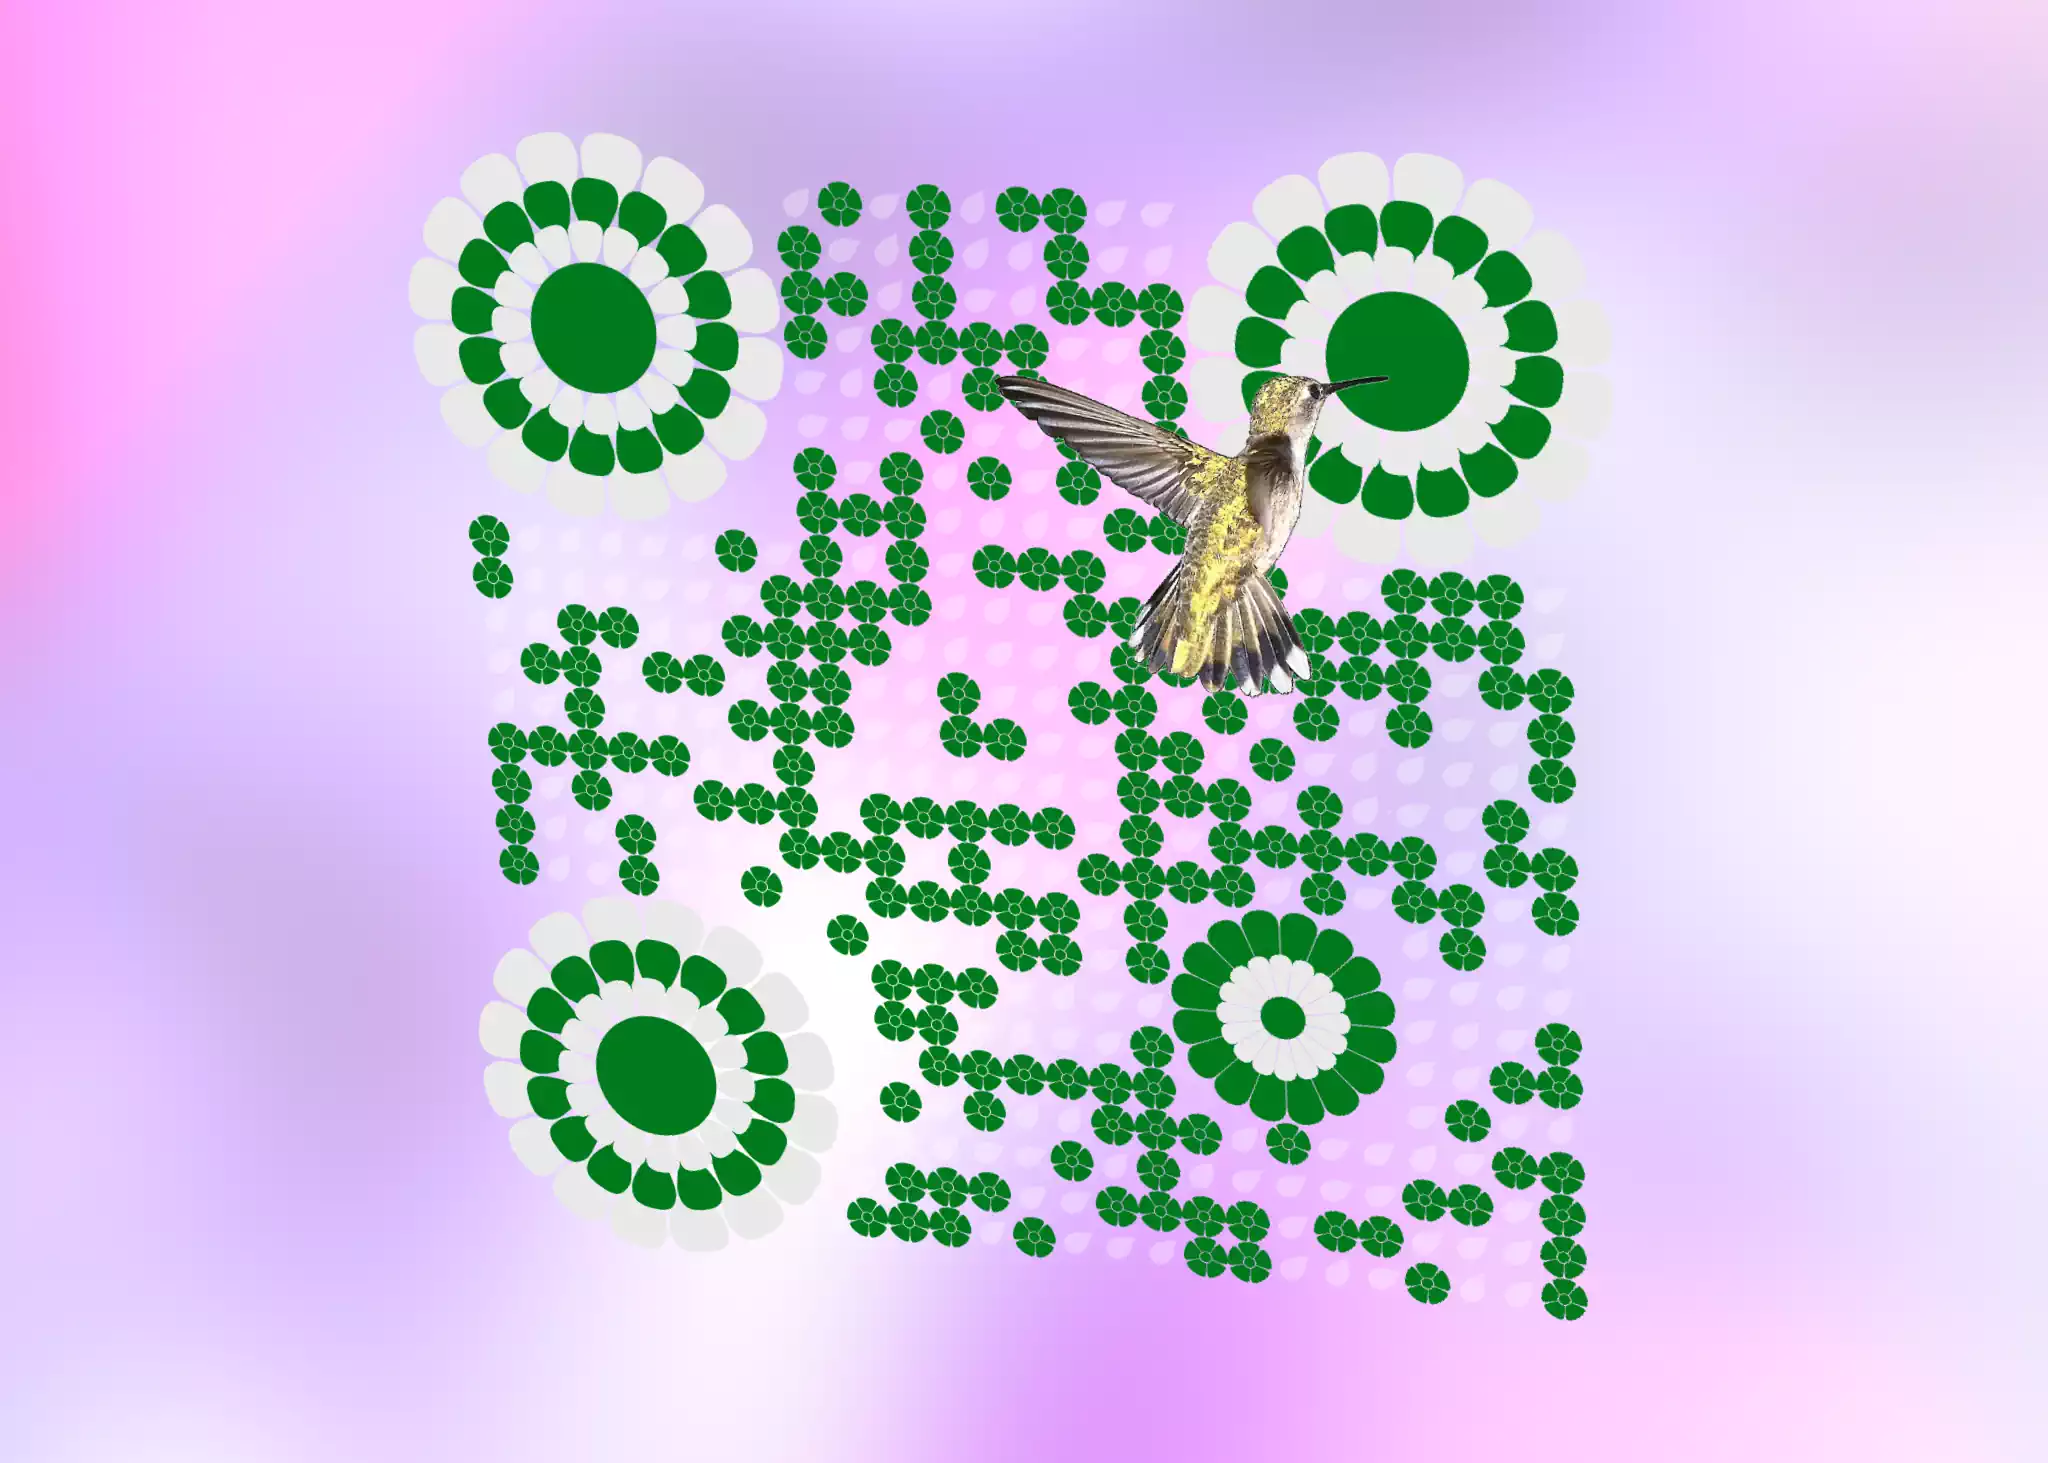 QrcodeLab online qr code generator - qr code image editor - hummingbird foraging a flower themed qr code